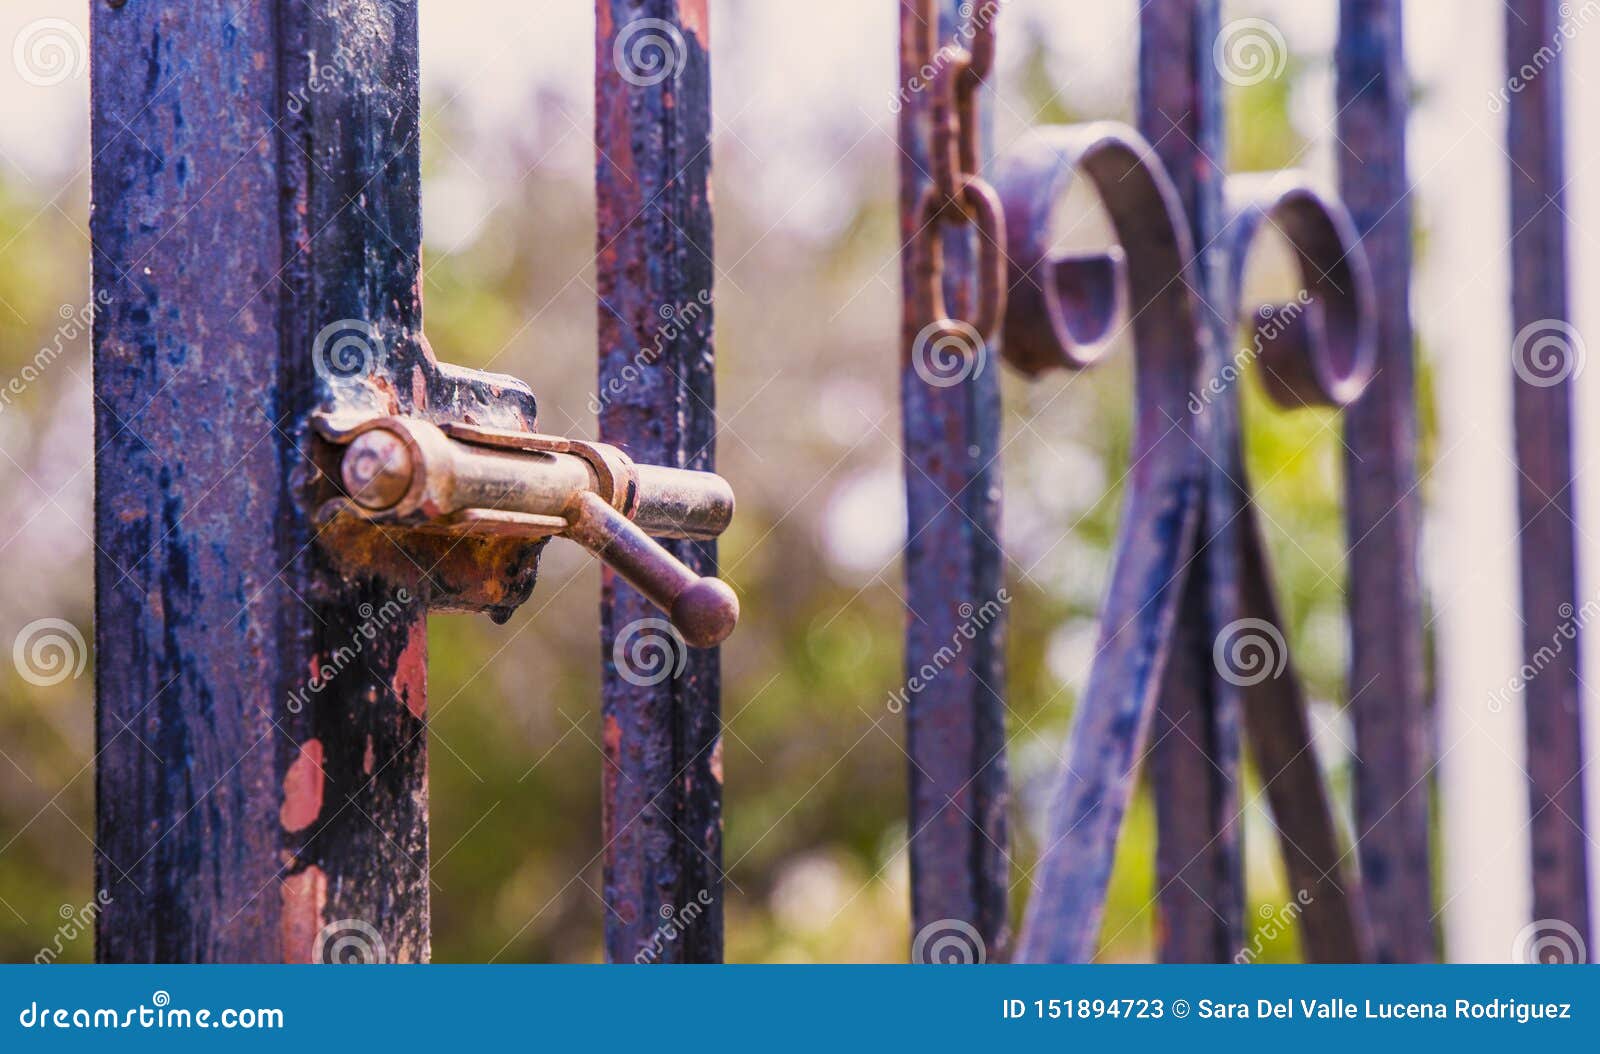 rusty lock closing the gate